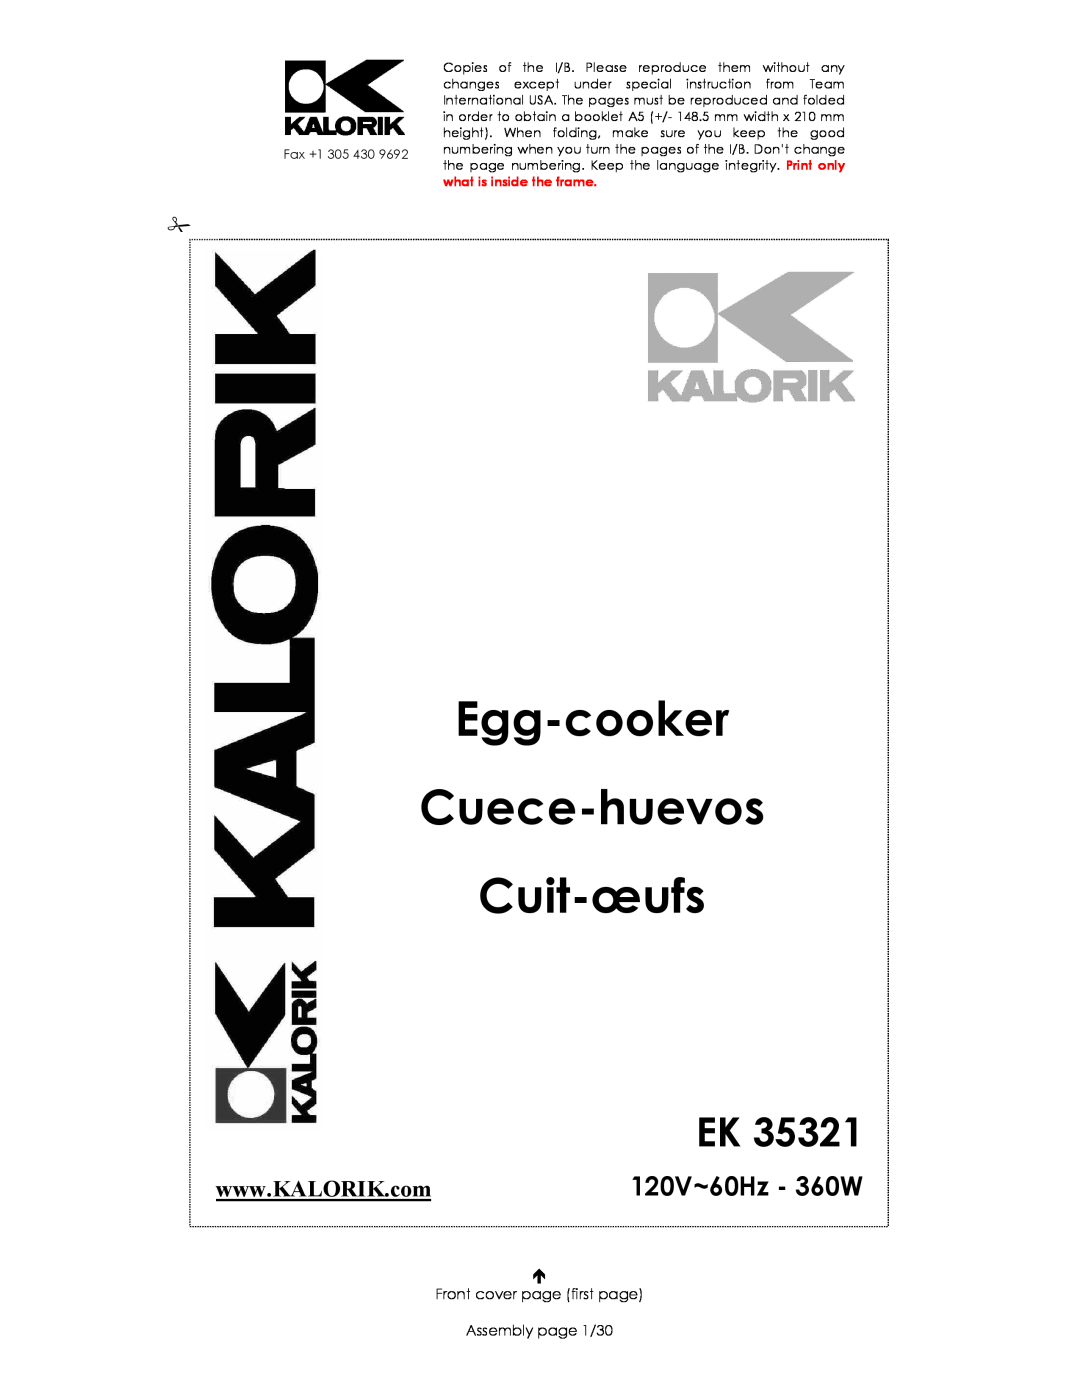 Kalorik EK35321 manual Egg-cooker Cuece-huevos Cuit-œufs, Front cover page first page Assembly page 1/30 